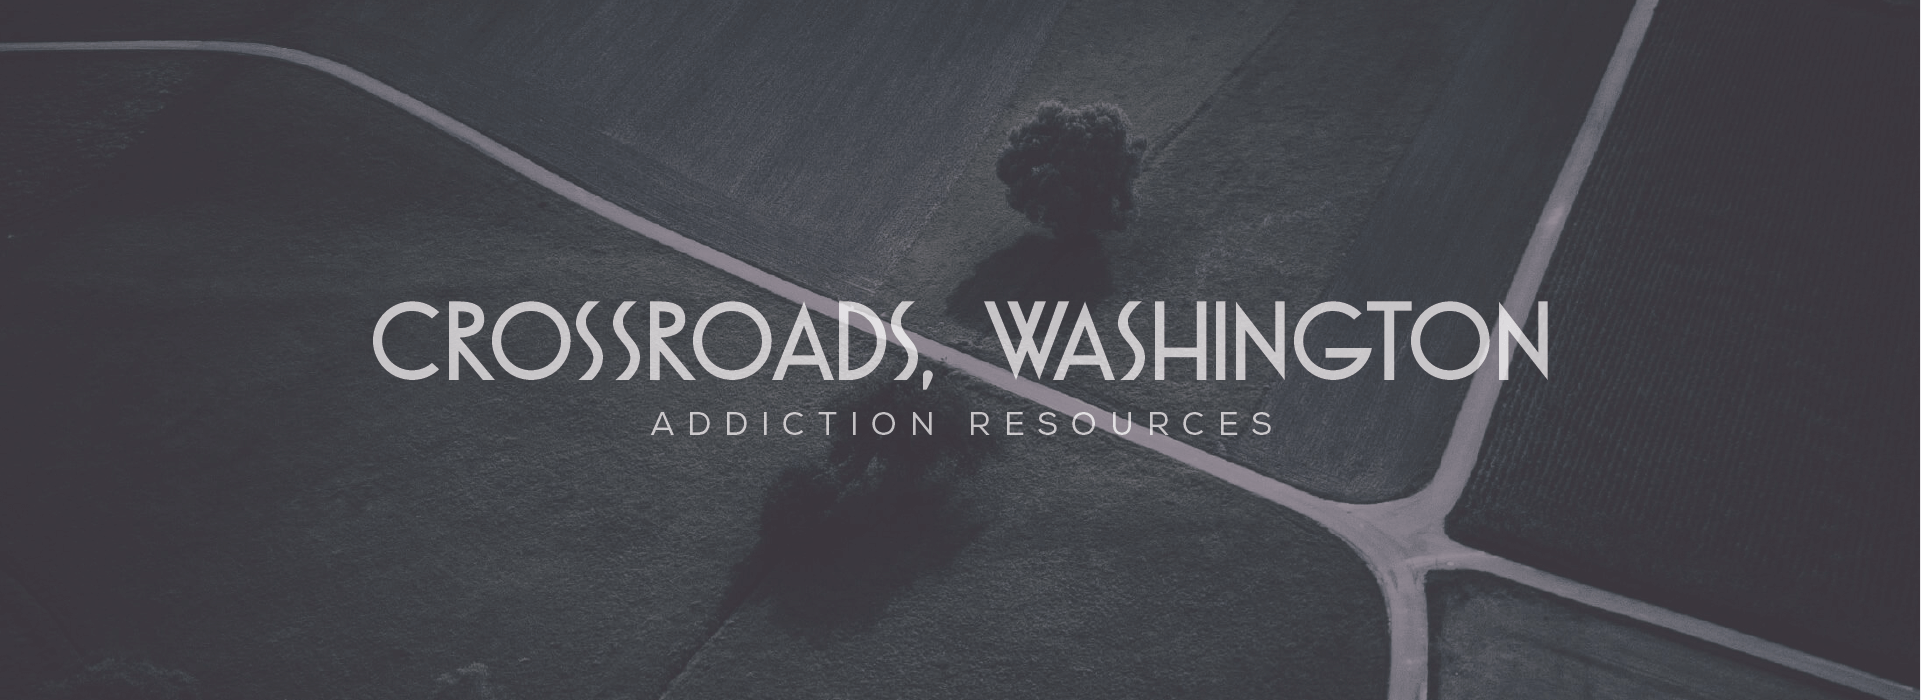 Crossroads, Washington Addiction Information